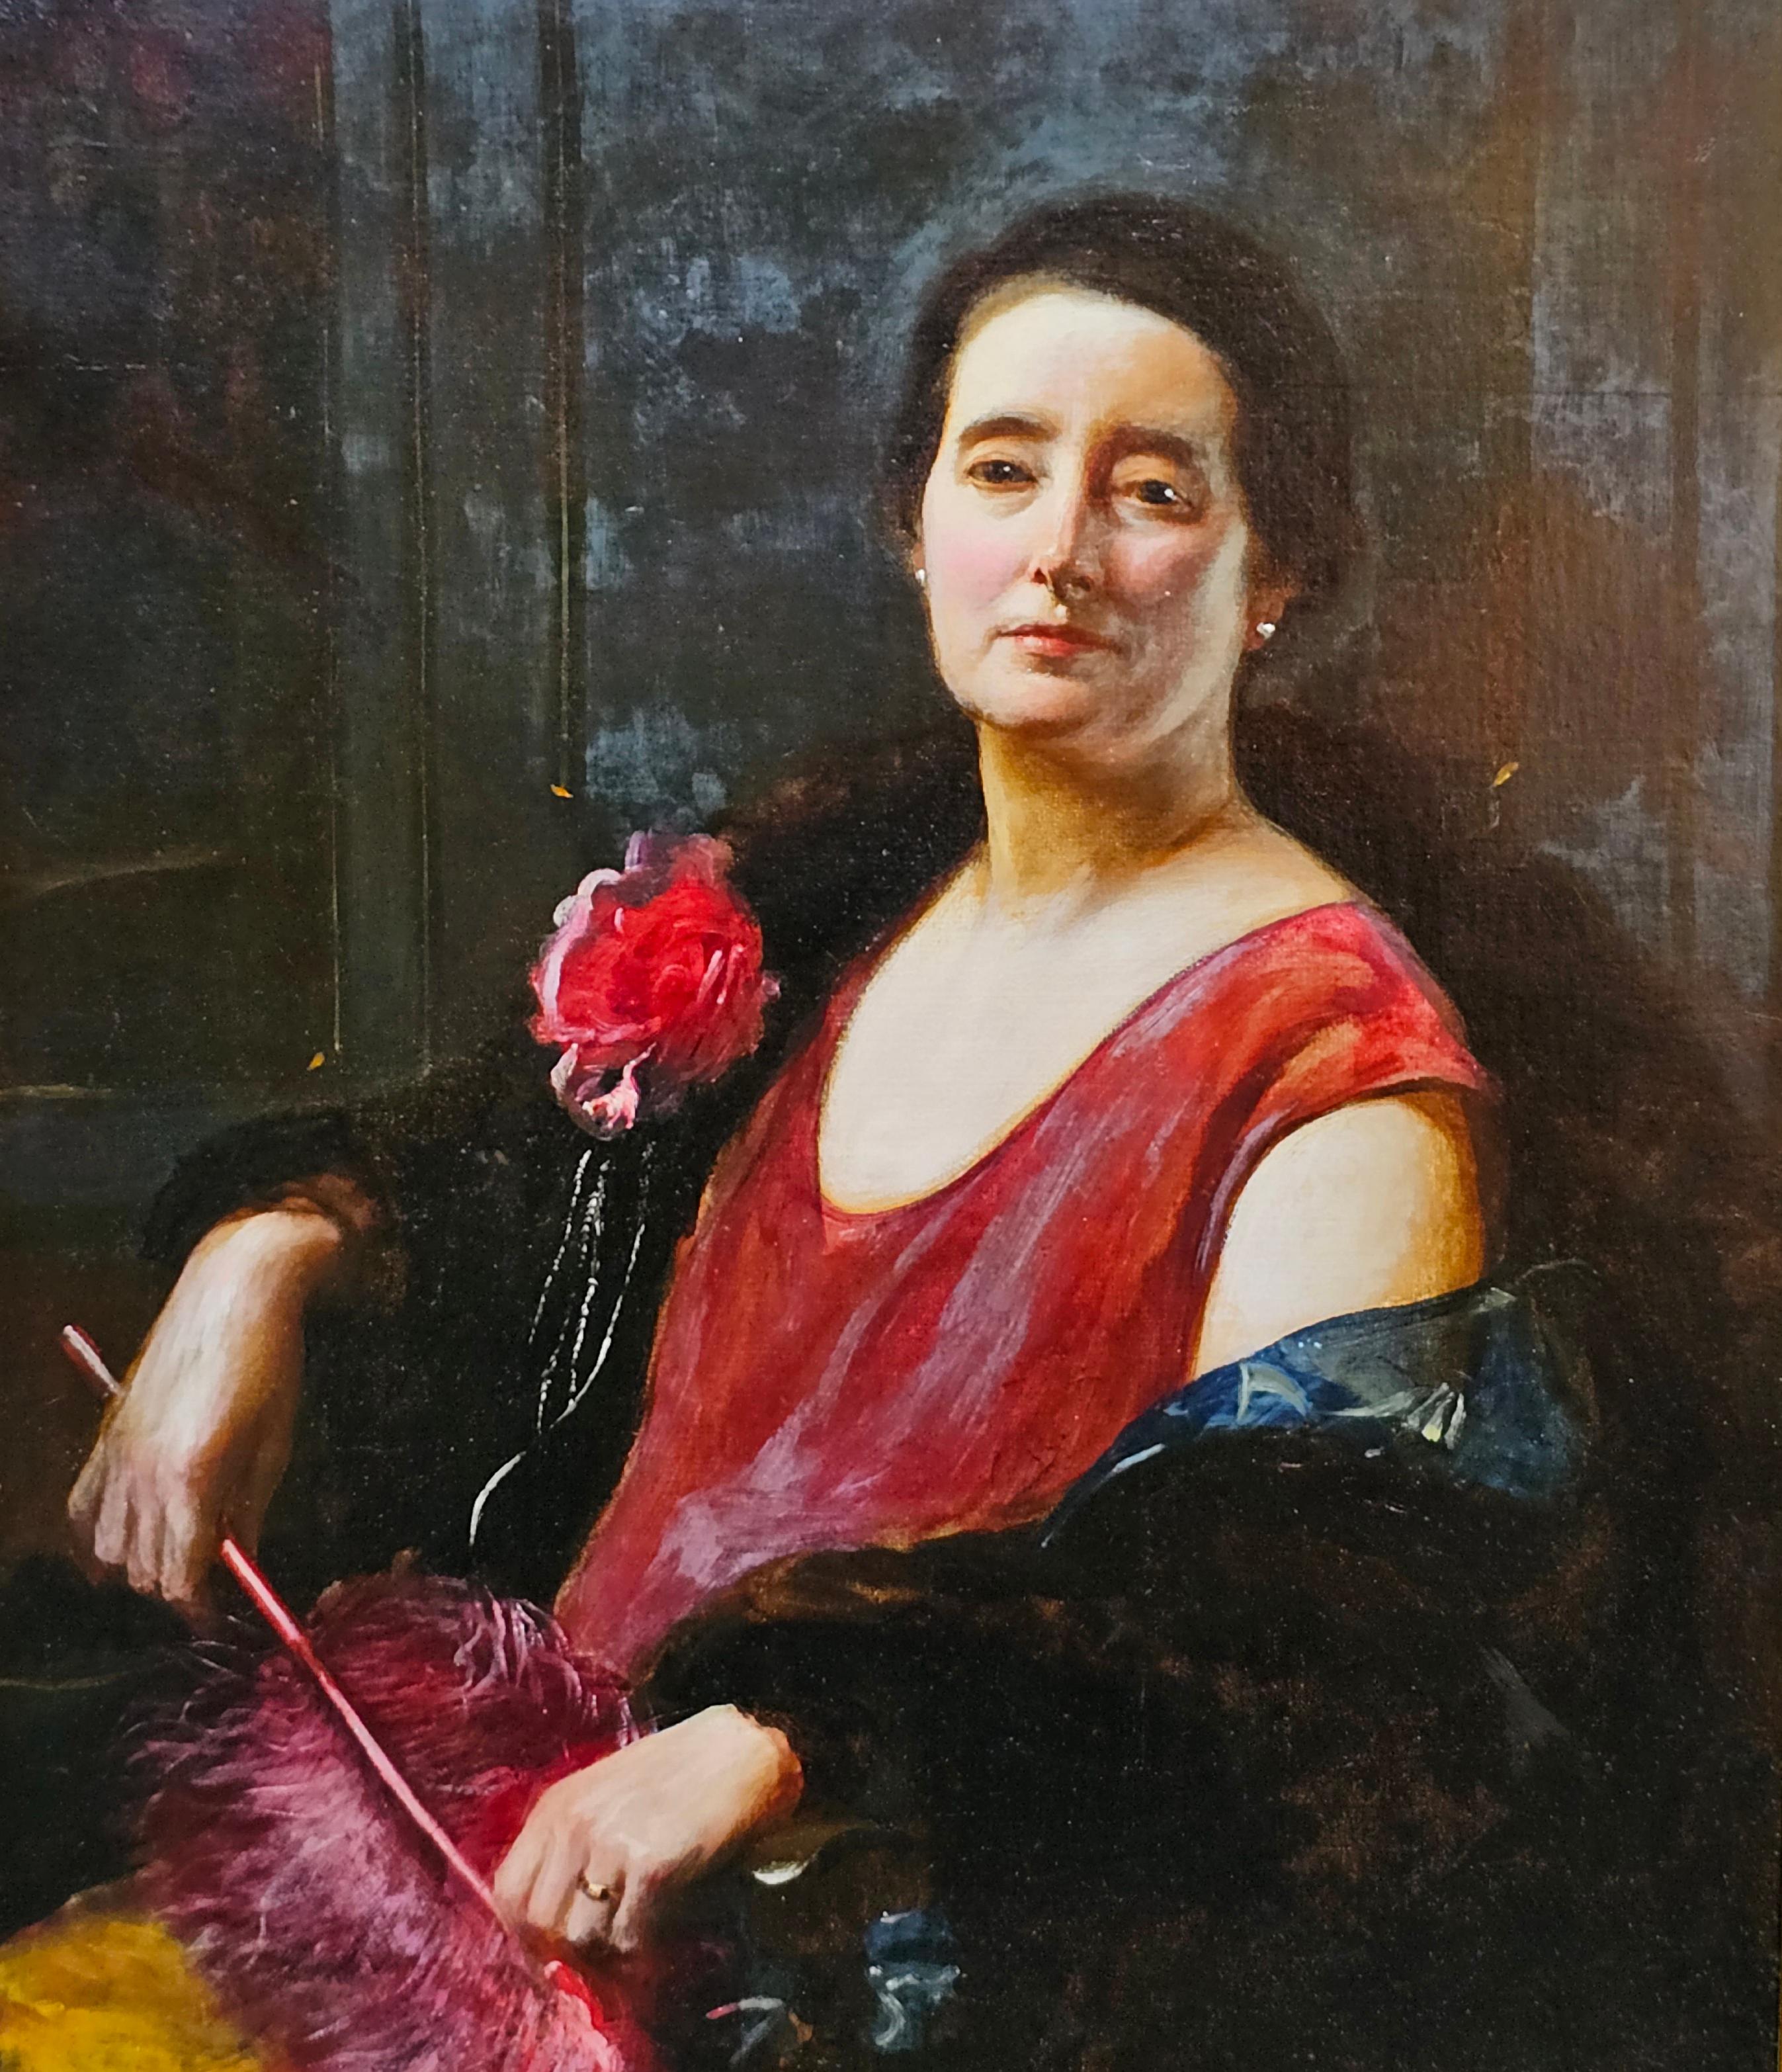 Portrait of an Edwardian Lady - British American art portrait oil painting - Painting by John Singer Sargent